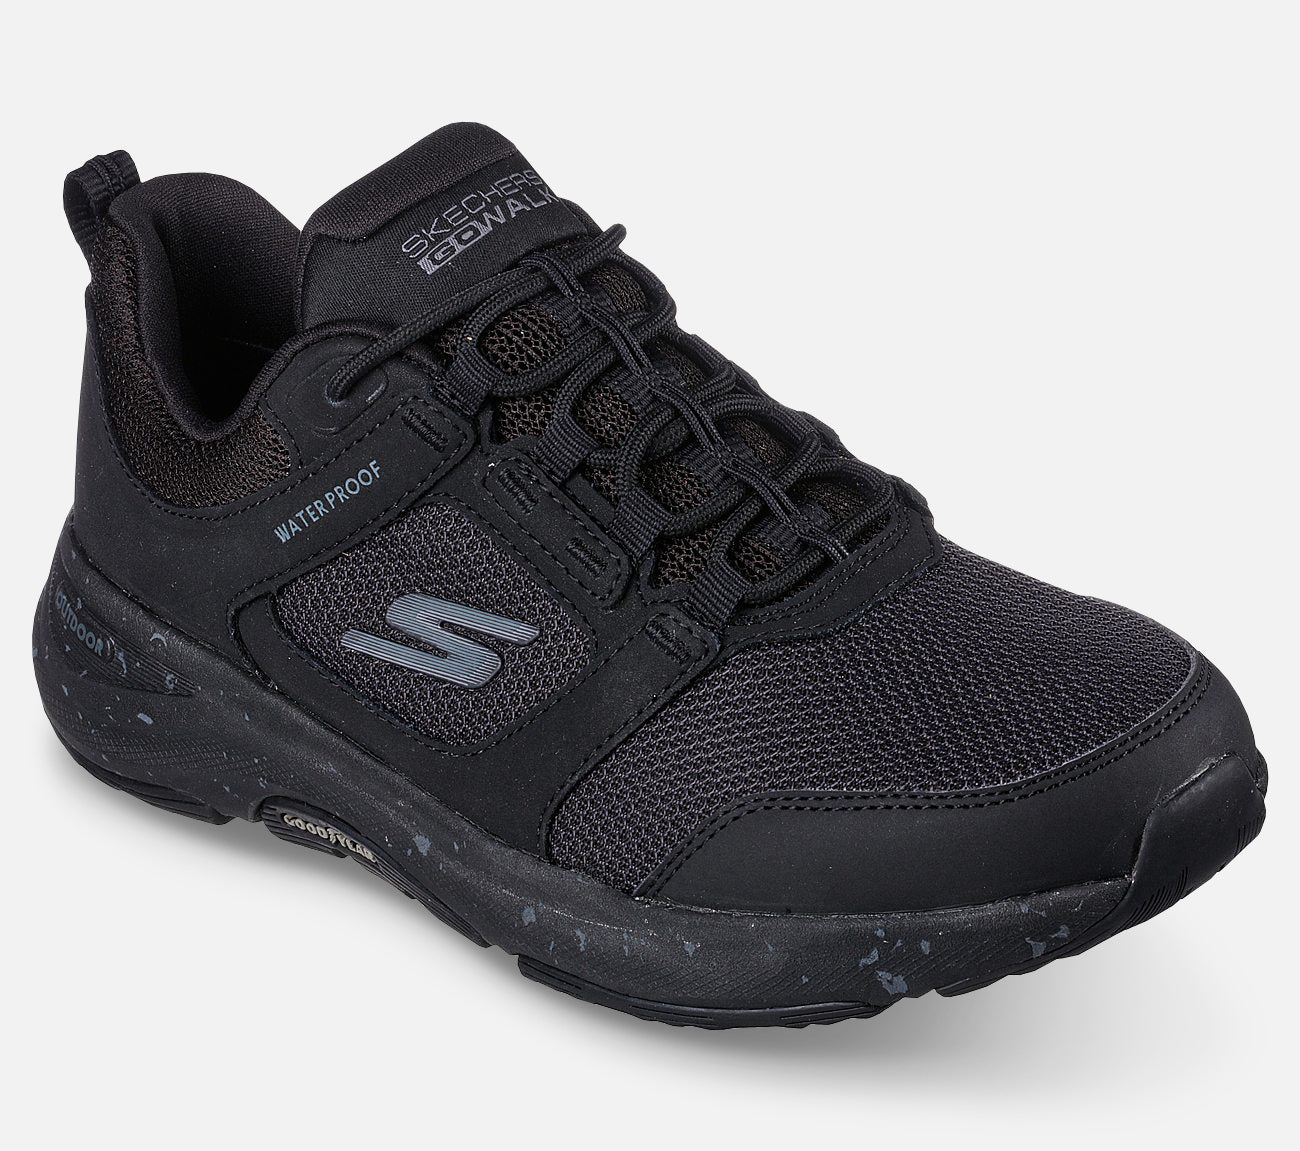 GO WALK Outdoors – River Patch Waterproof Shoe Skechers